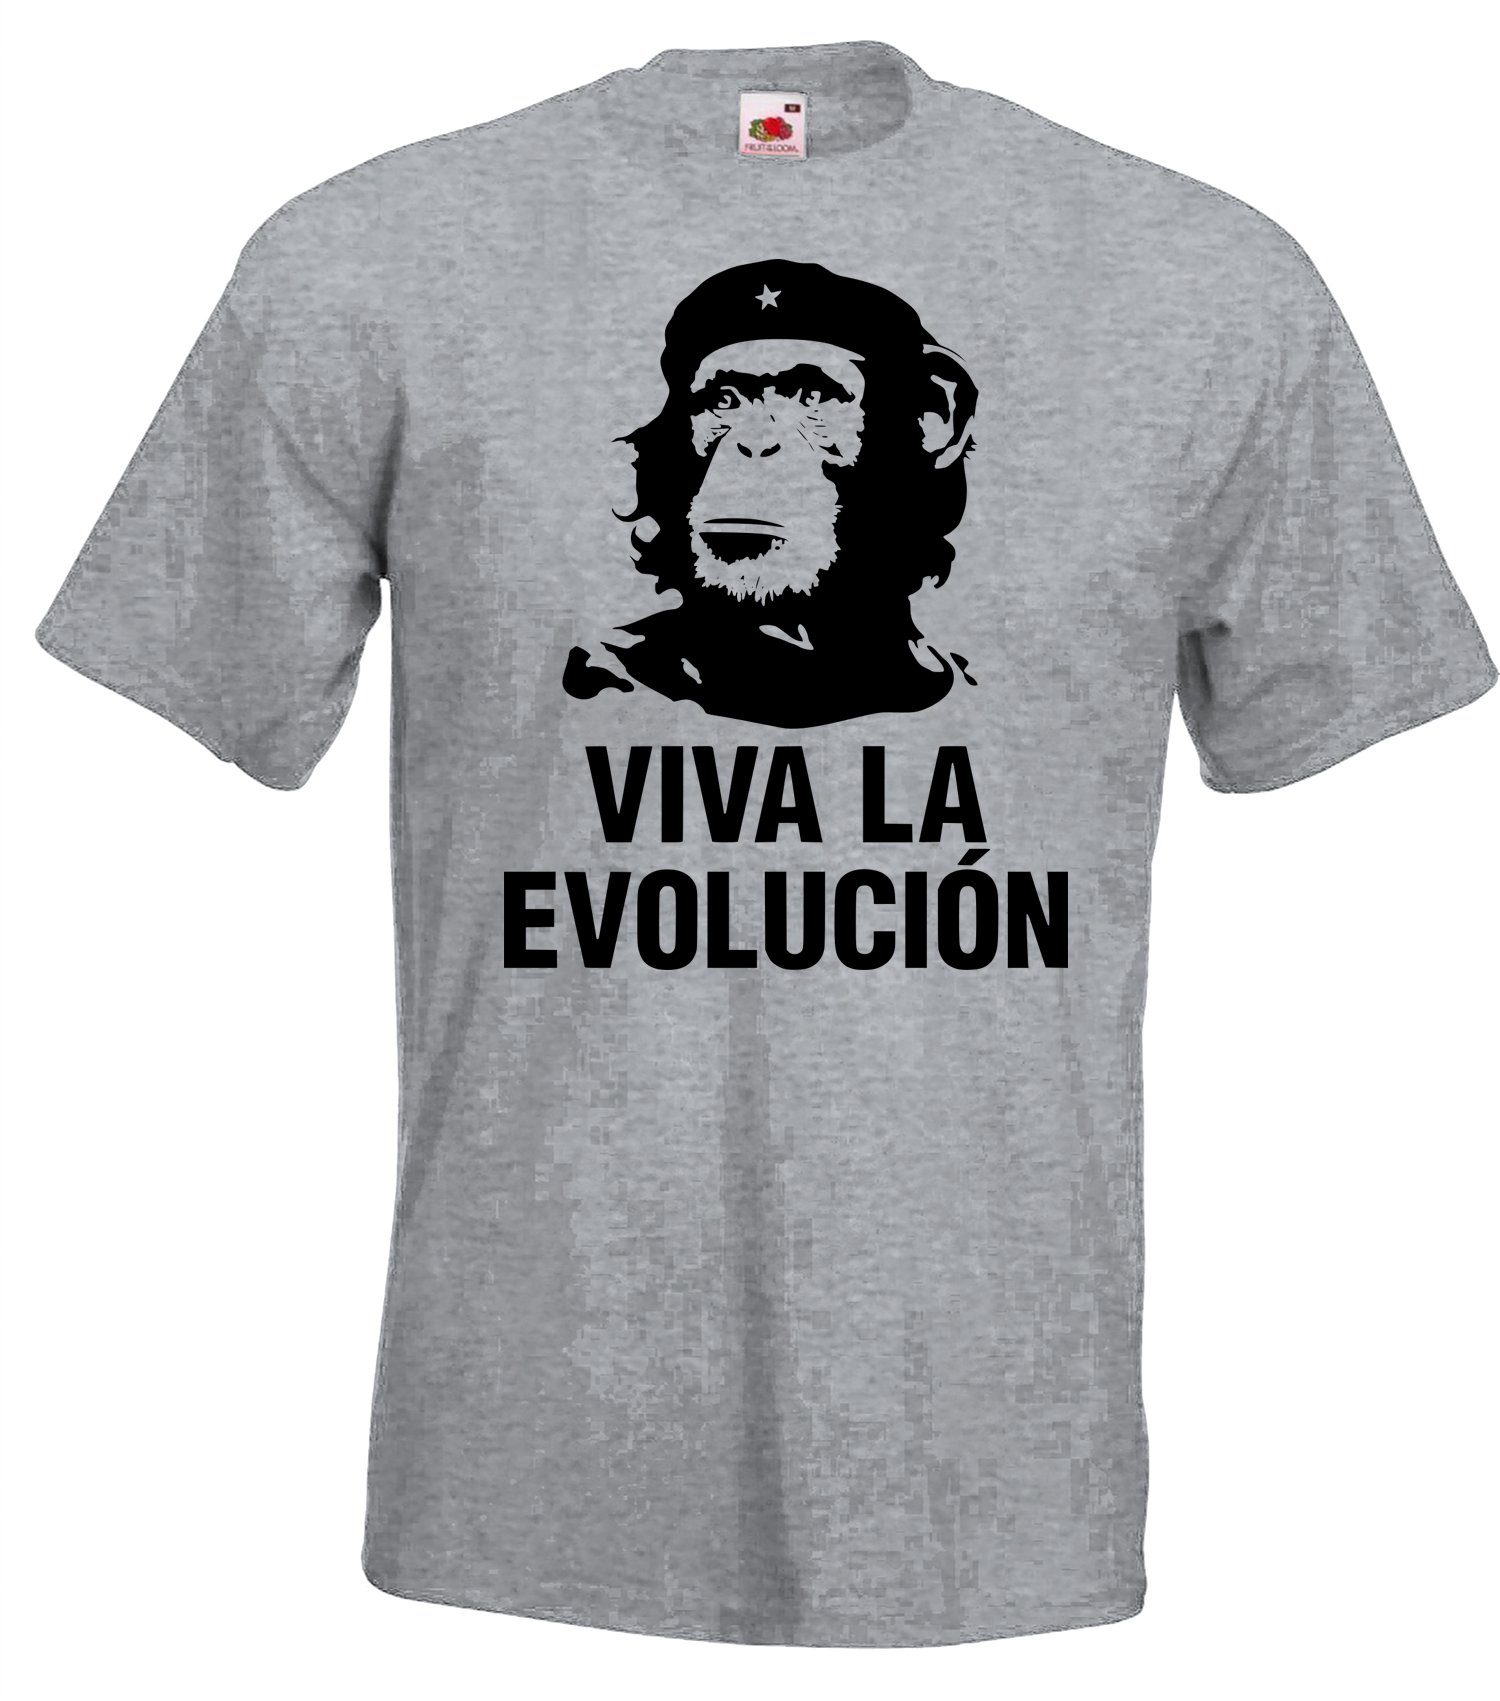 T-Shirt la Youth Fun Designz Viva trendigem mit Evolucion Herren T-Shirt Frontdruck Grau